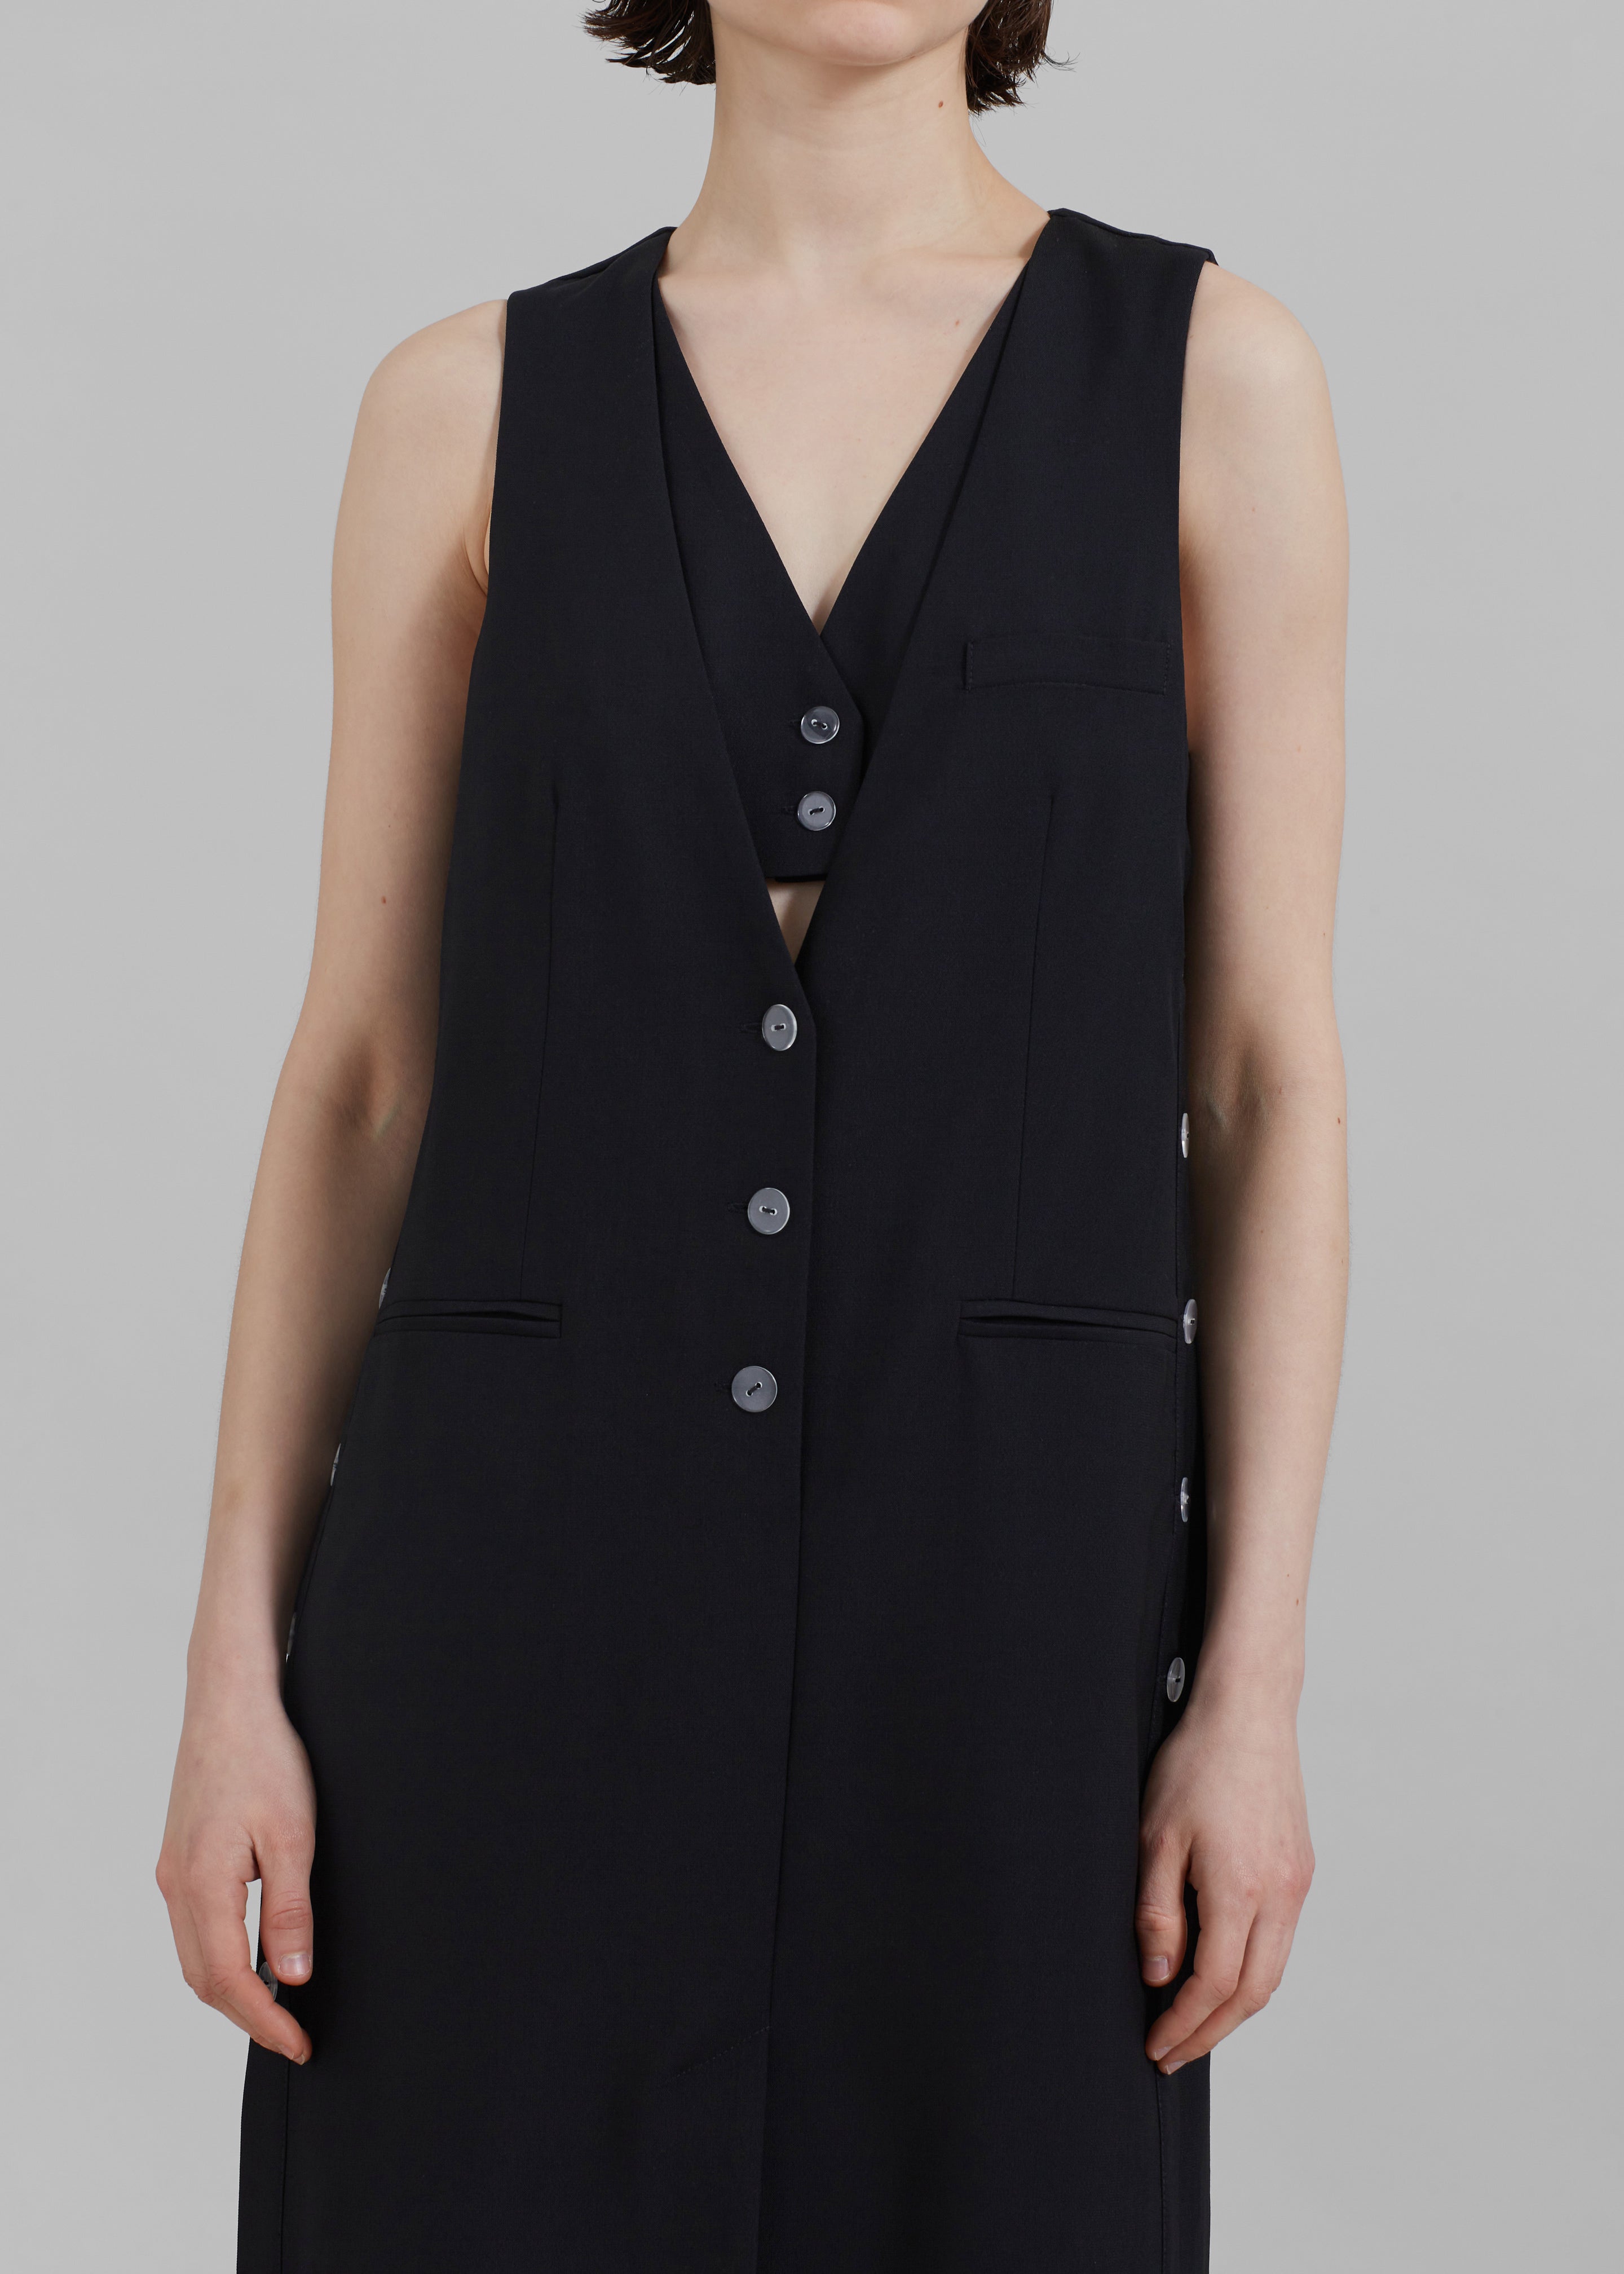 3.1 Phillip Lim Tailored Vest Dress with Set-In Bra - Black - 4